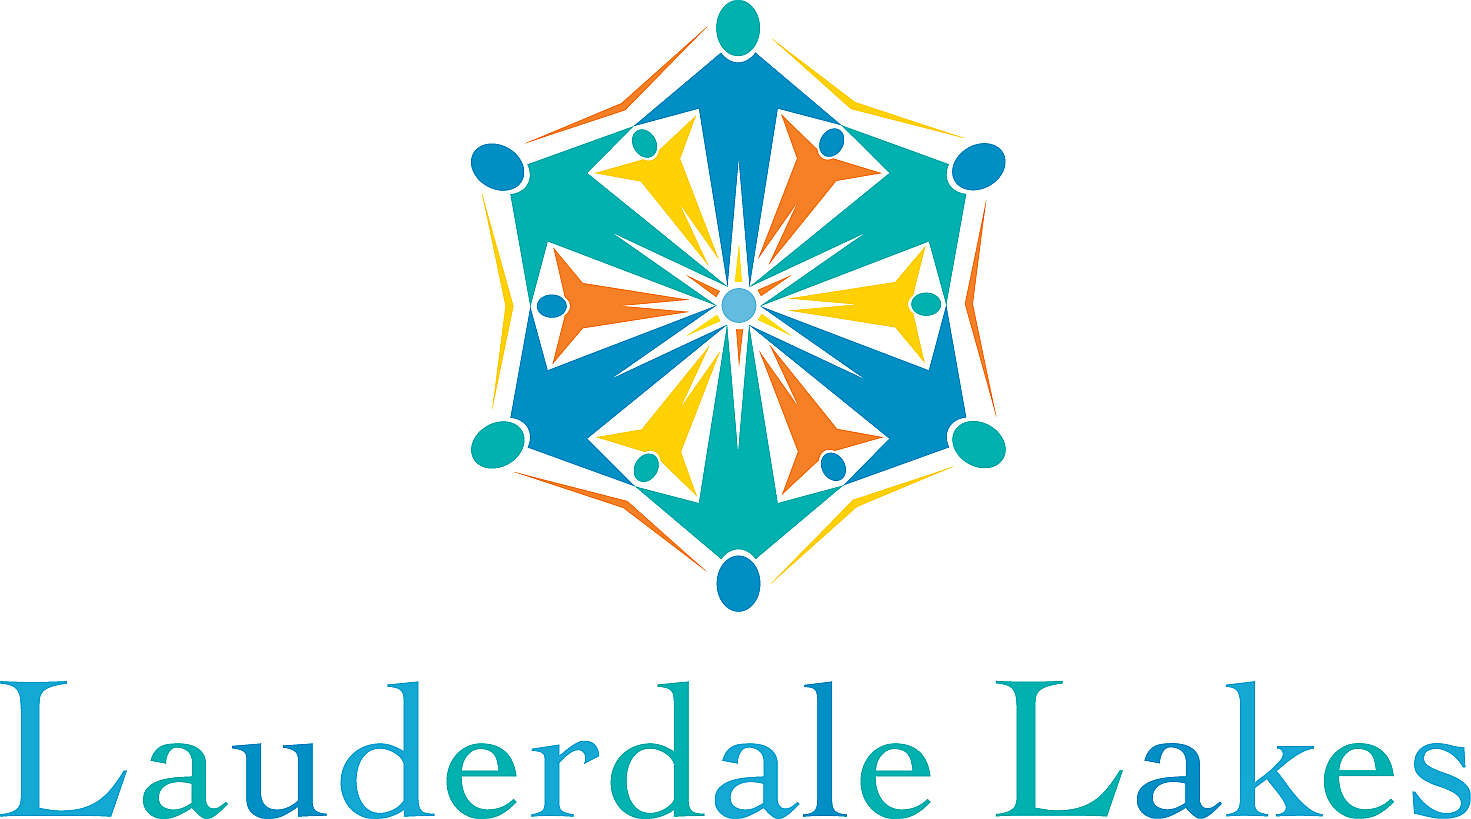 Seal Of Lauderdale Lakesc Florida